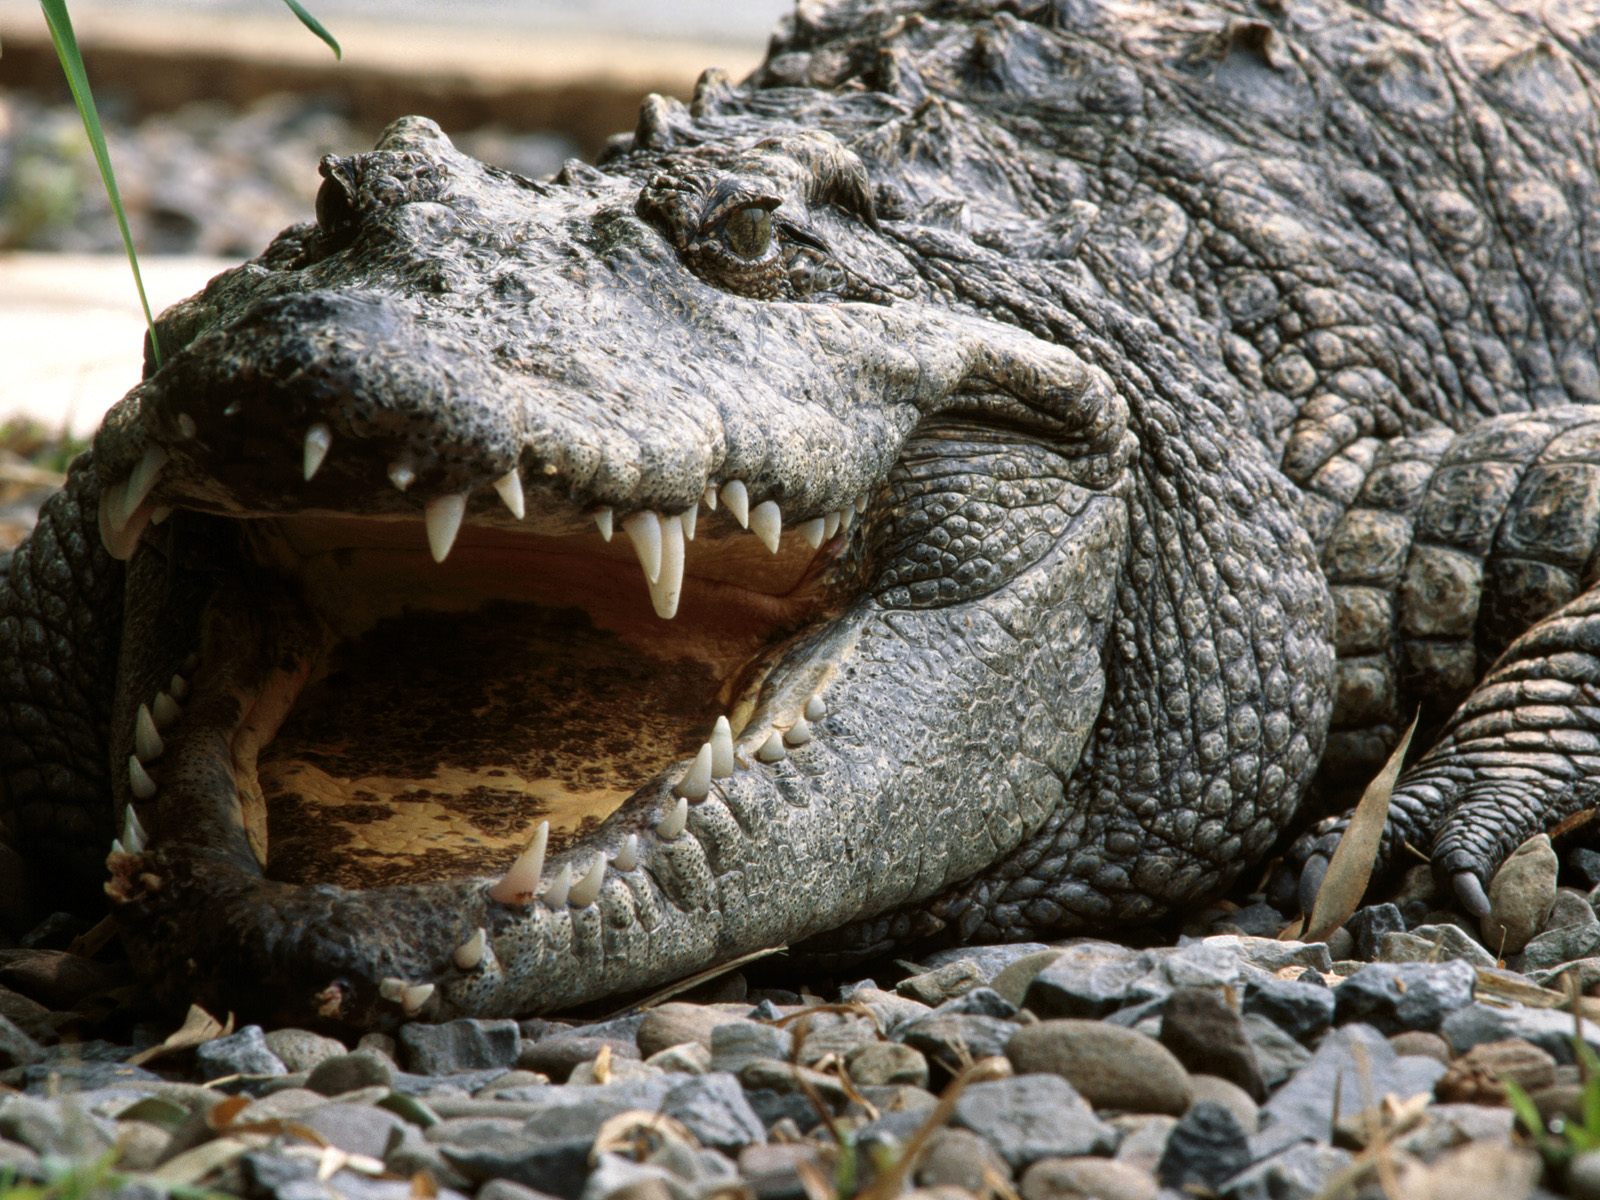 Siamese Crocodile Vietnam is one of the rarest crocodiles in the world